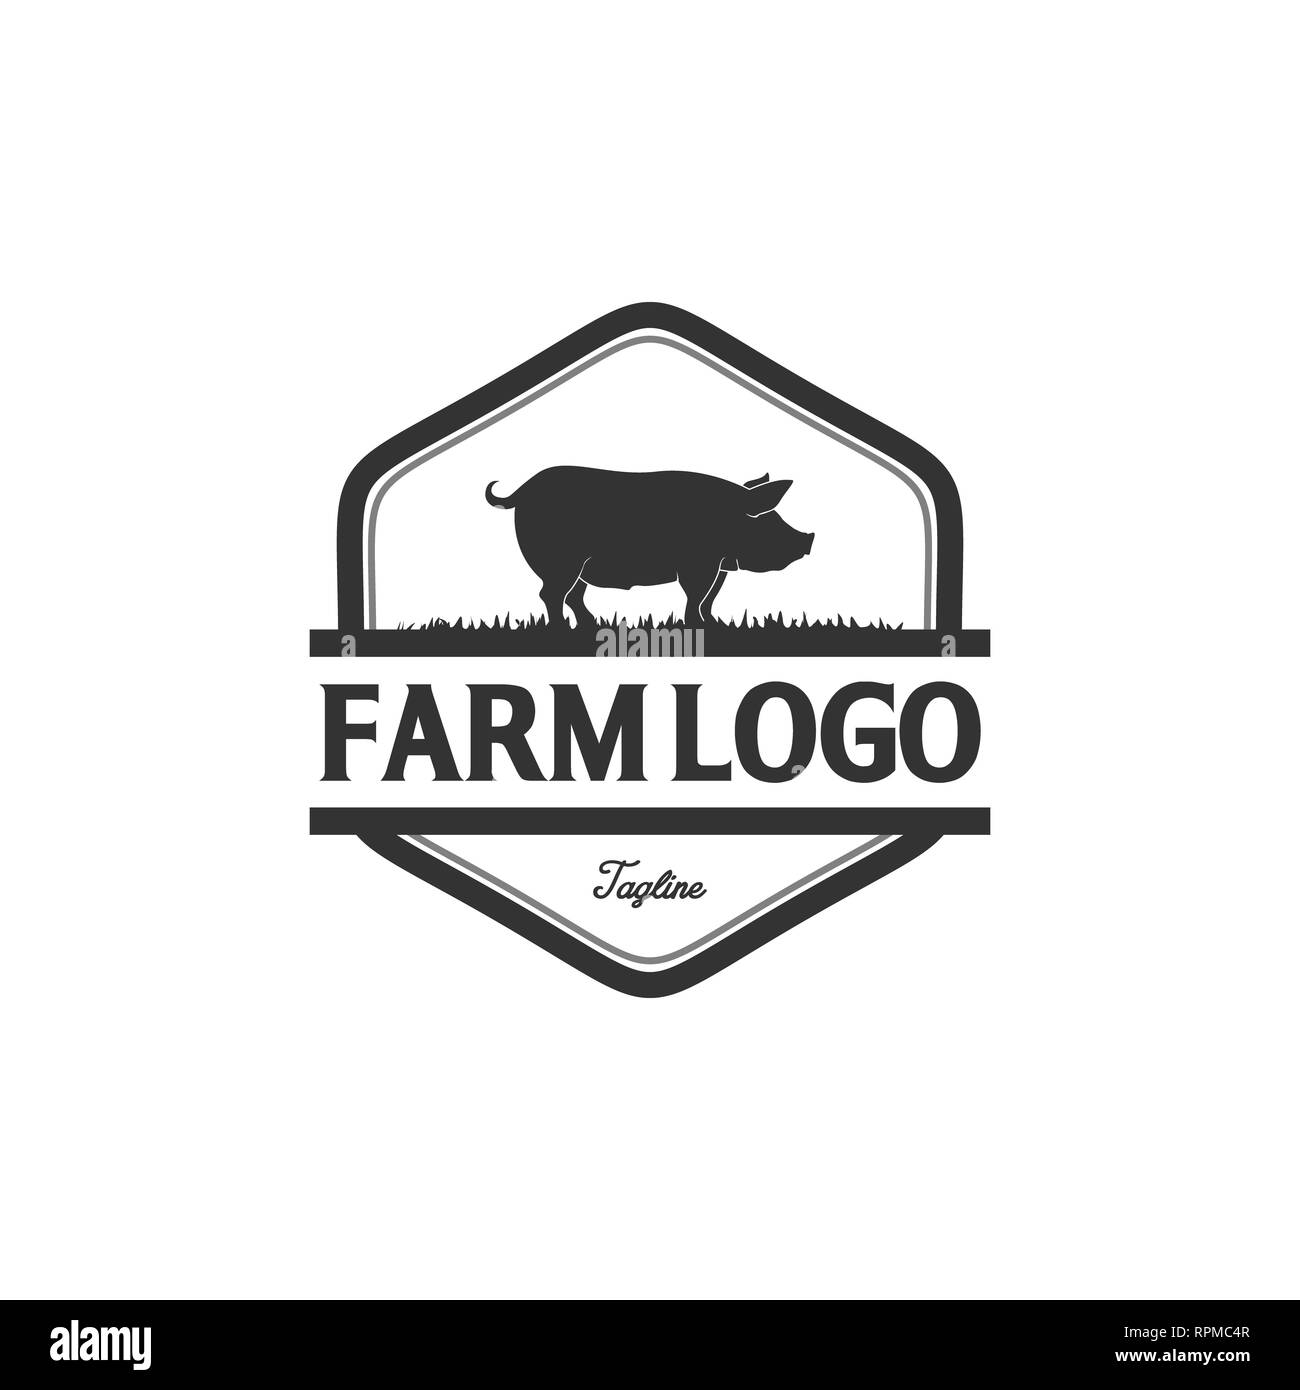 vintage pork logo designs for farm company Stock Photo